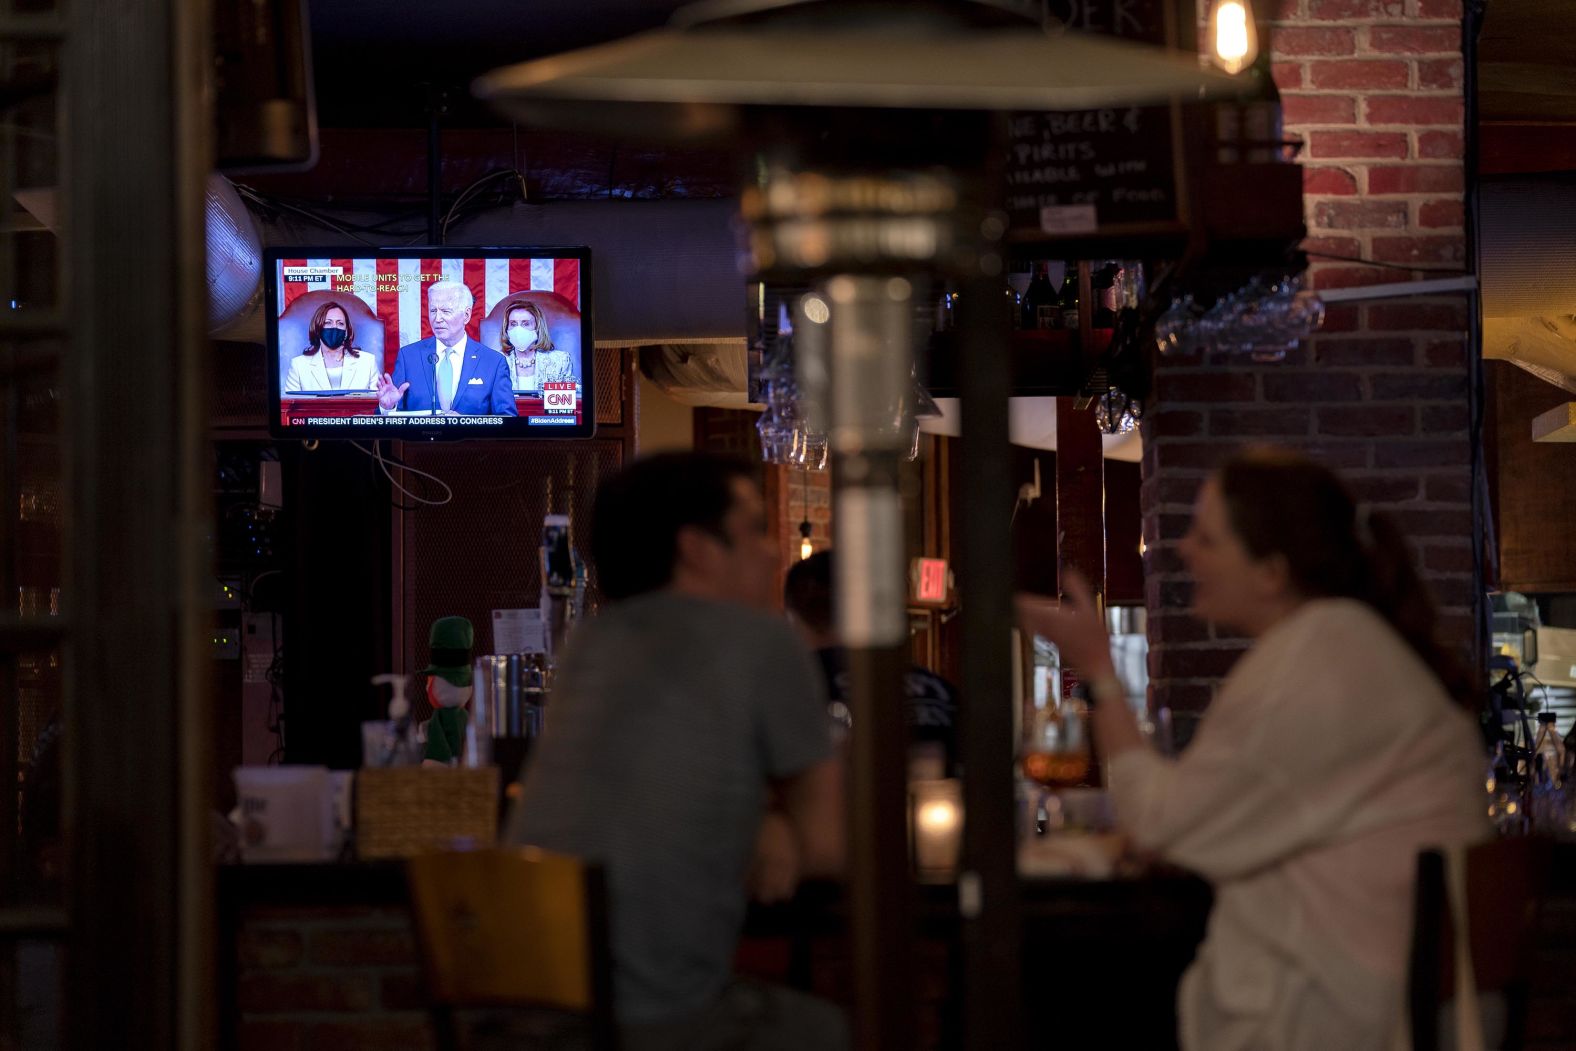 Biden's speech is seen on a television inside a bar in Washington, DC.